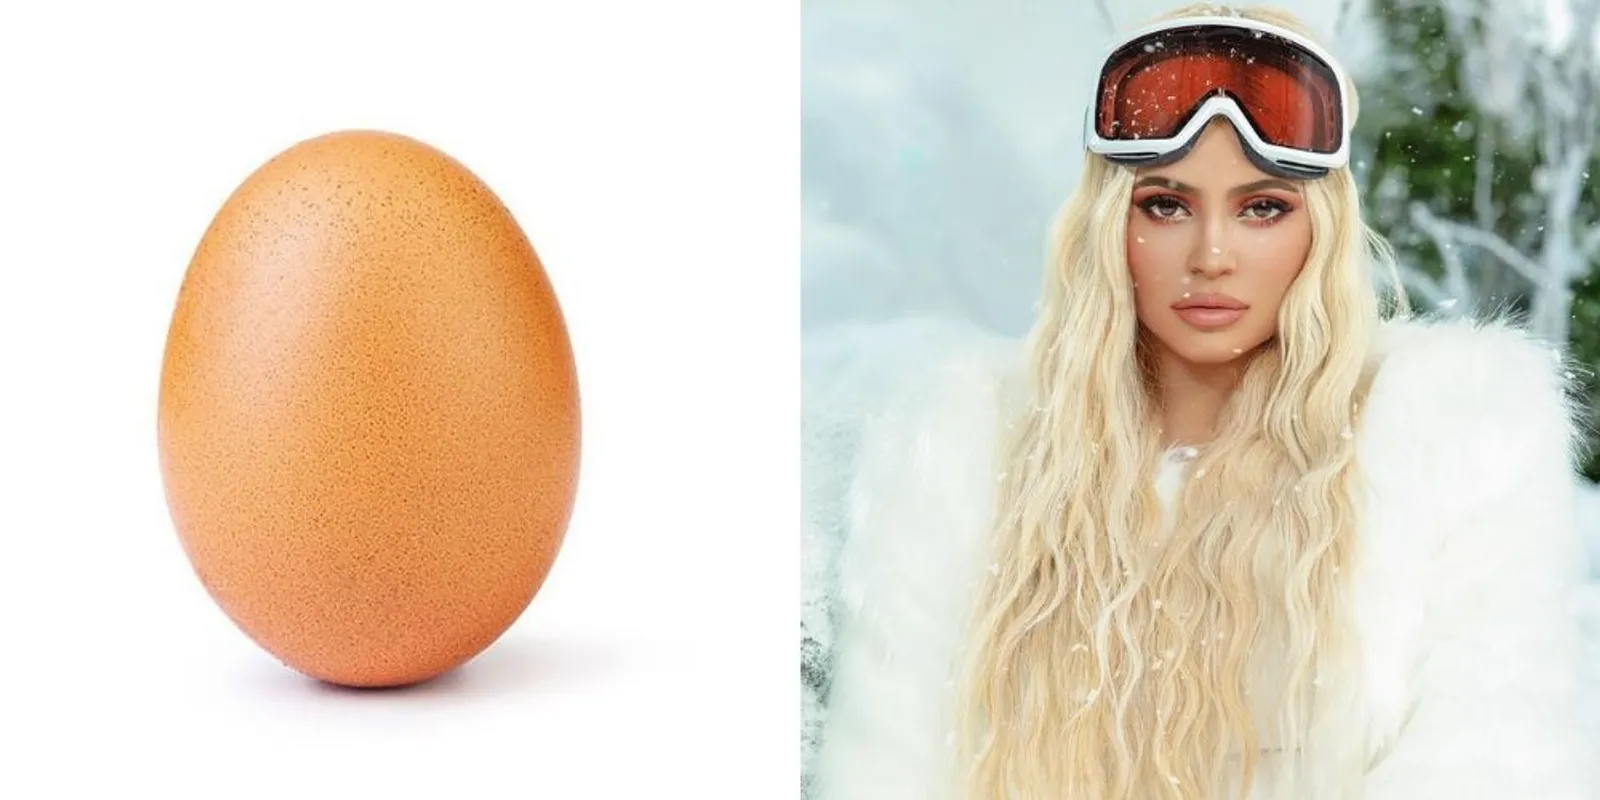 Cuma Foto Telur, Akun IG Ini Kalahkan Jumlah 'Like' Foto Kylie Jenner